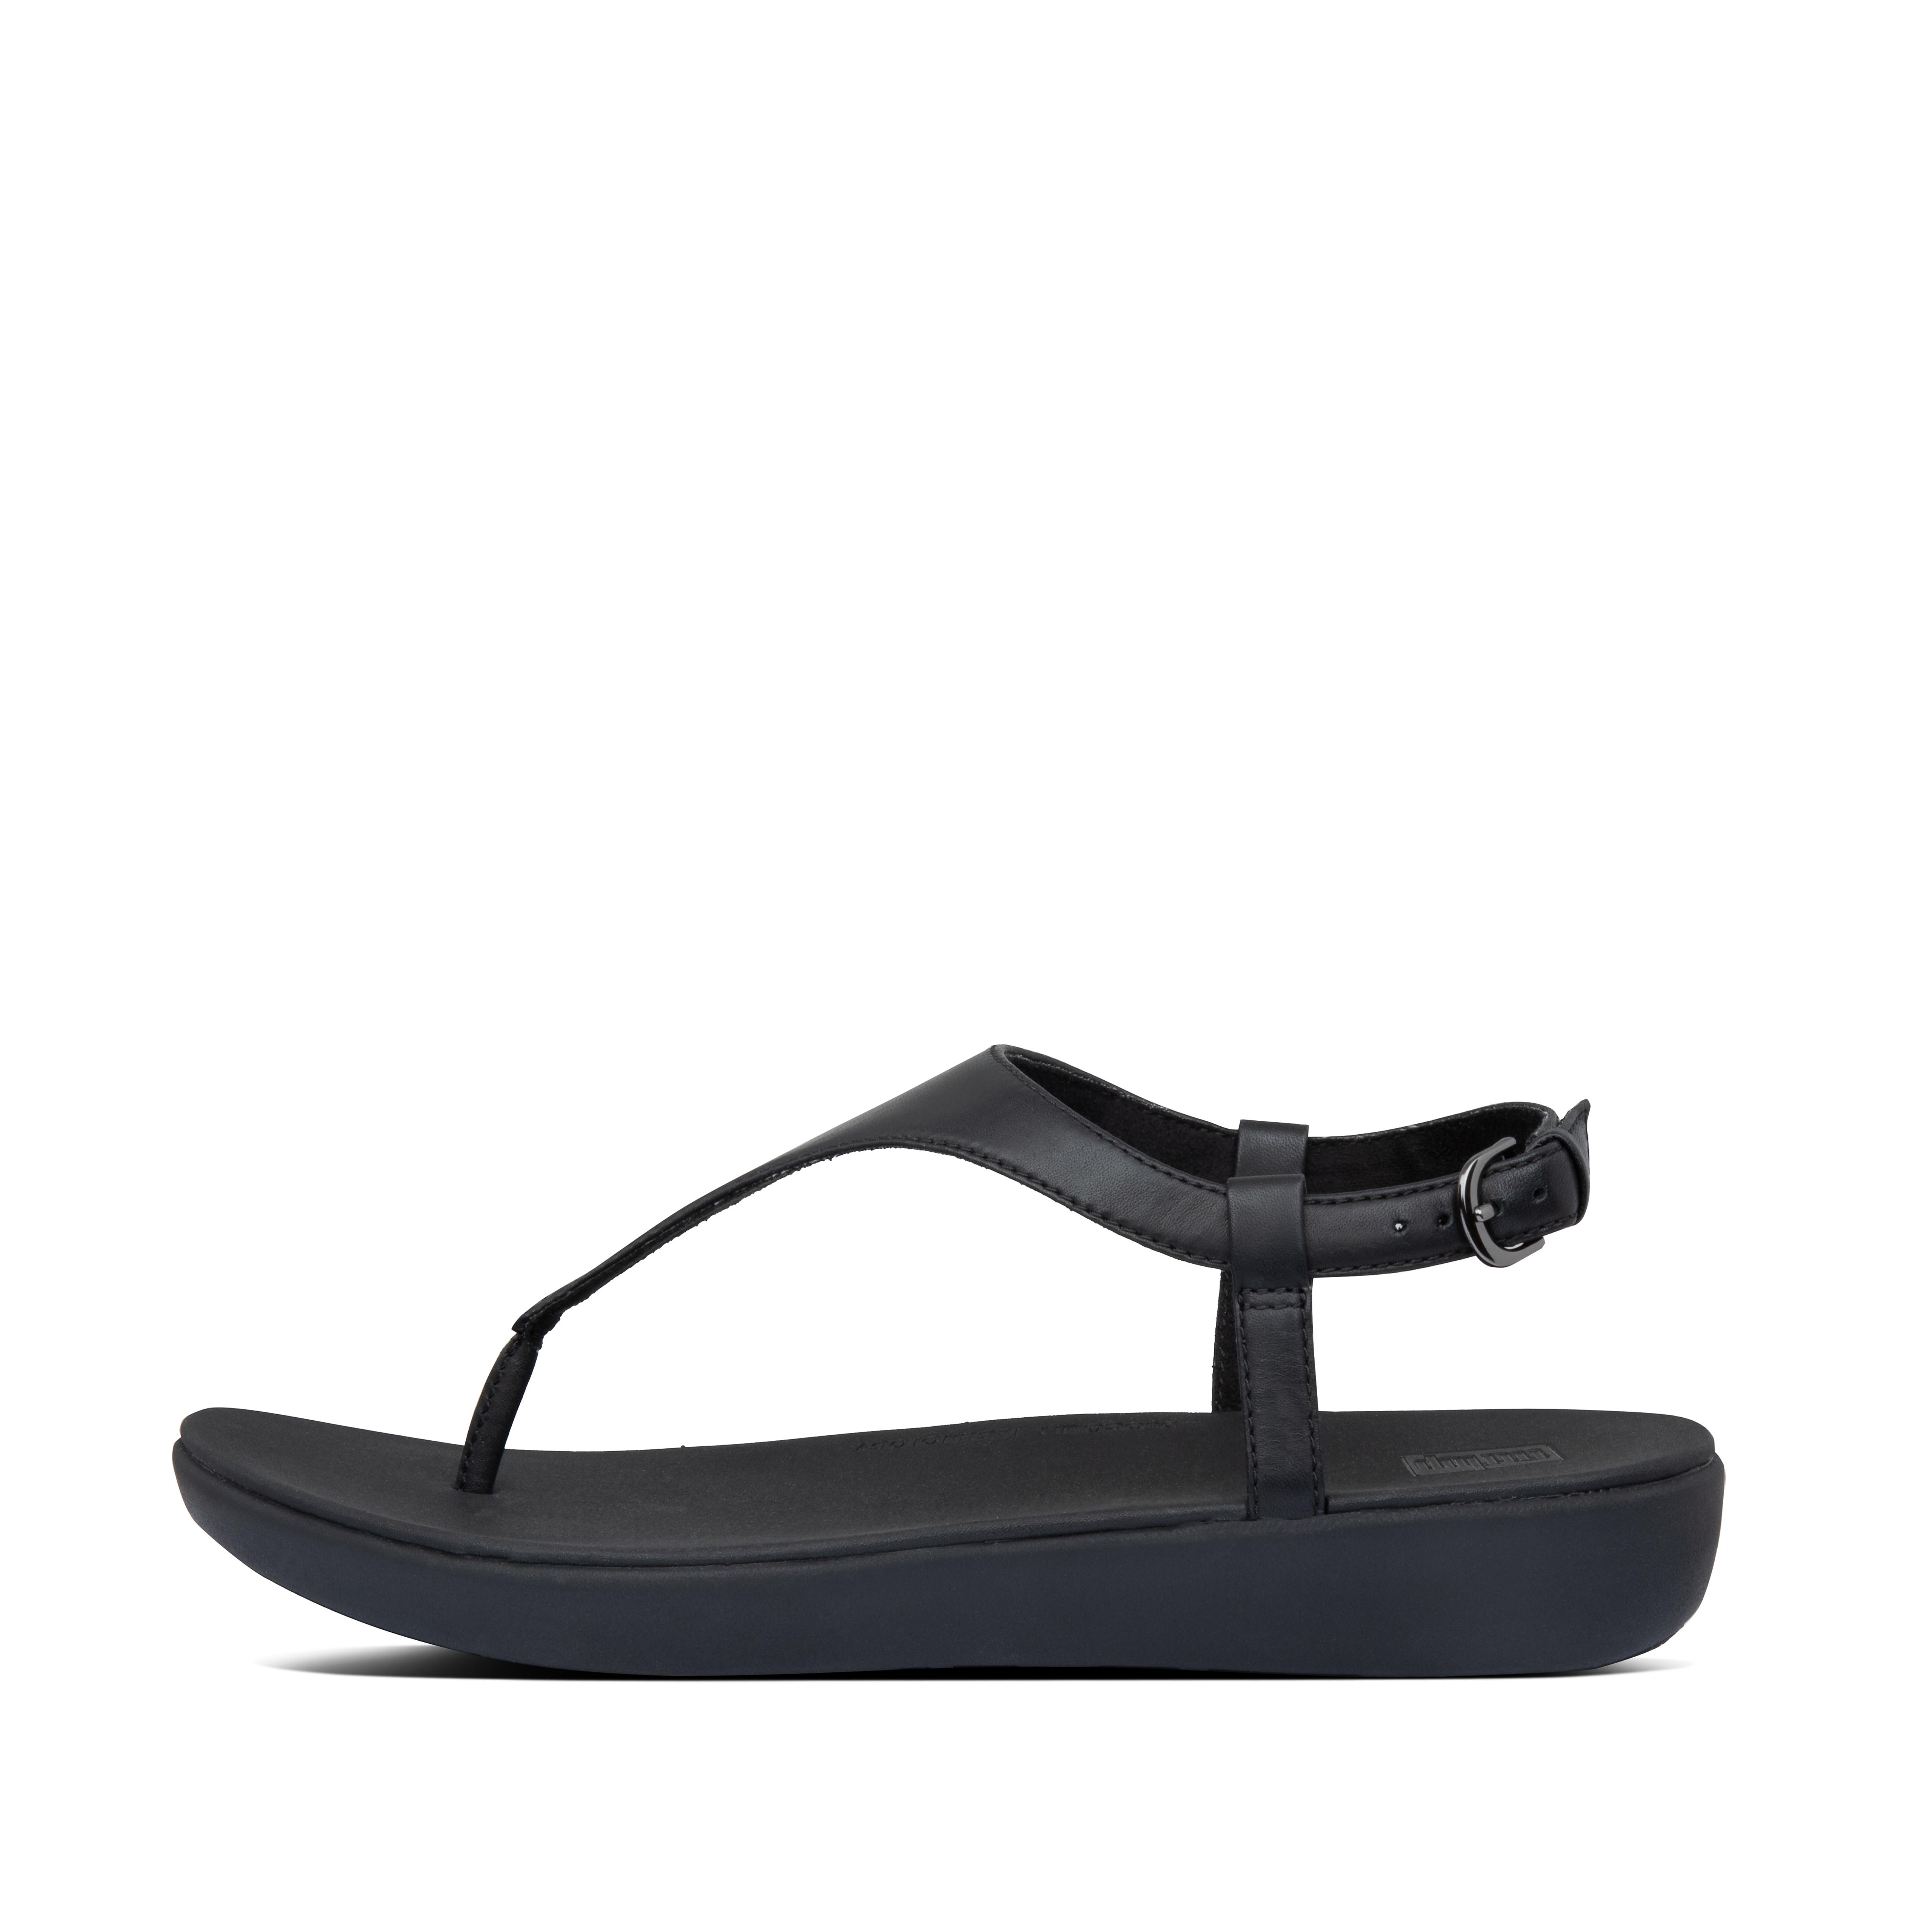 flip flop sandals with backstrap